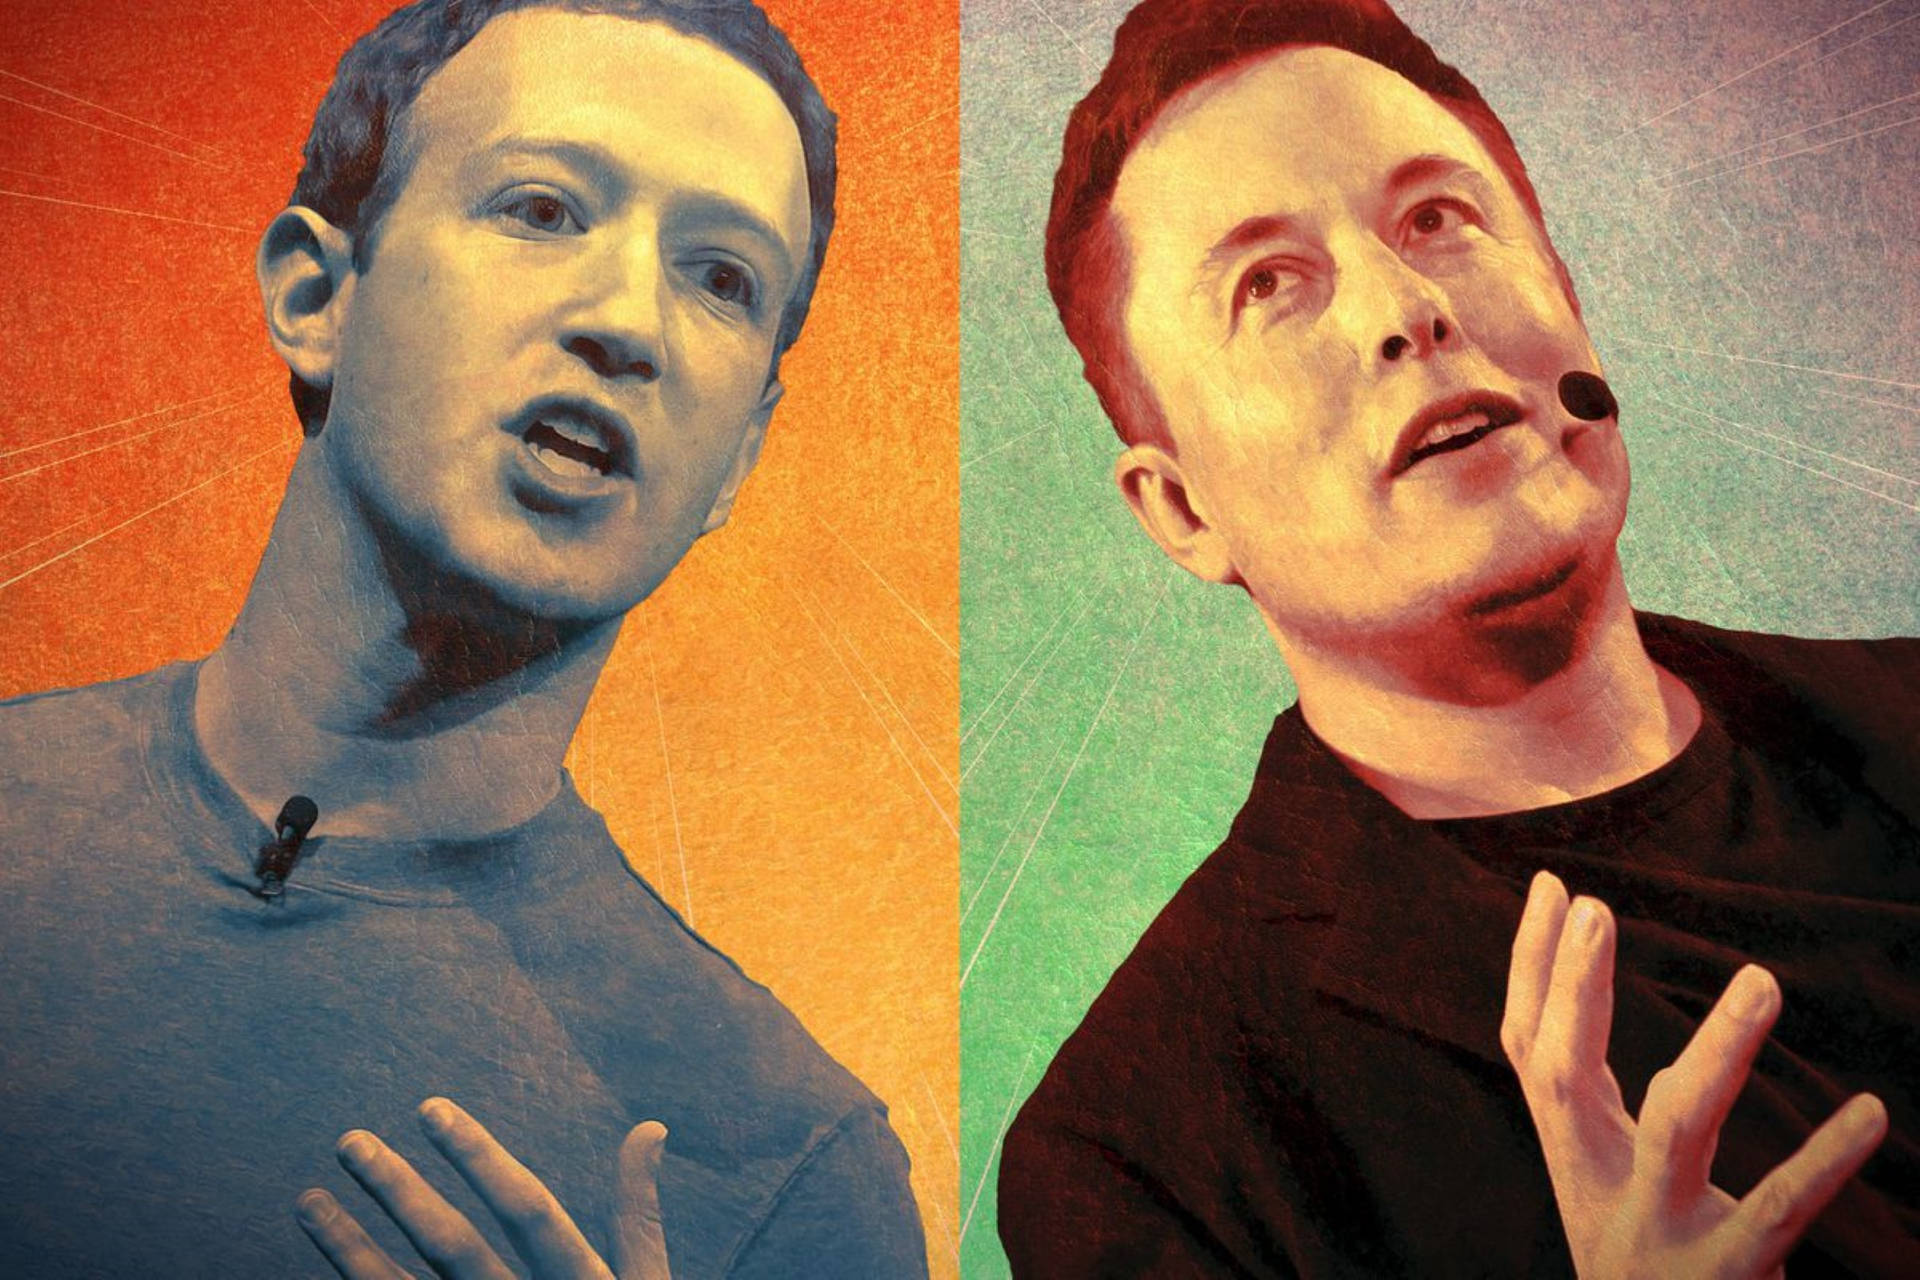 Mark Zuckerberg And Elon Musk Wallpaper